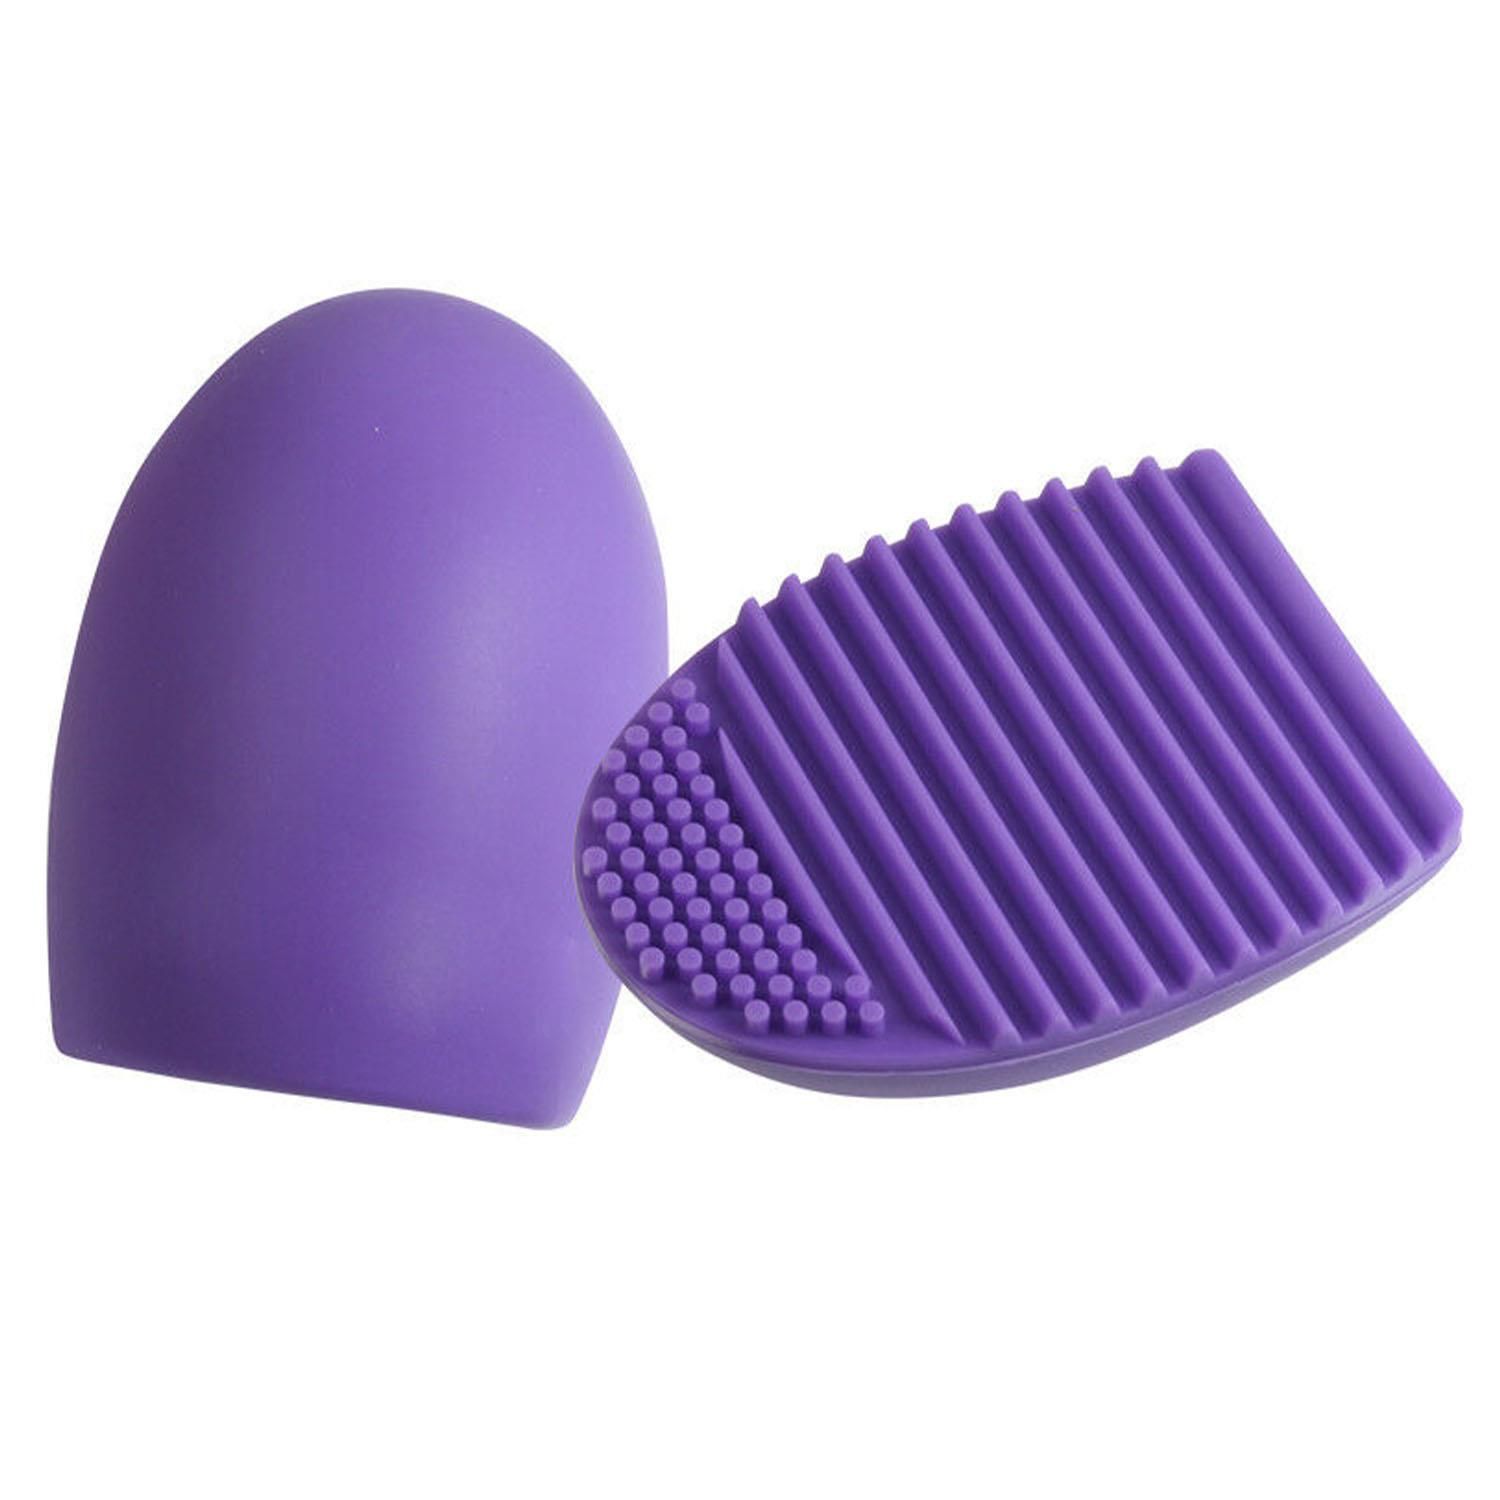 Envie Silicone Egg Sponge Scrubber Make-Up Brush Cleaner Purple